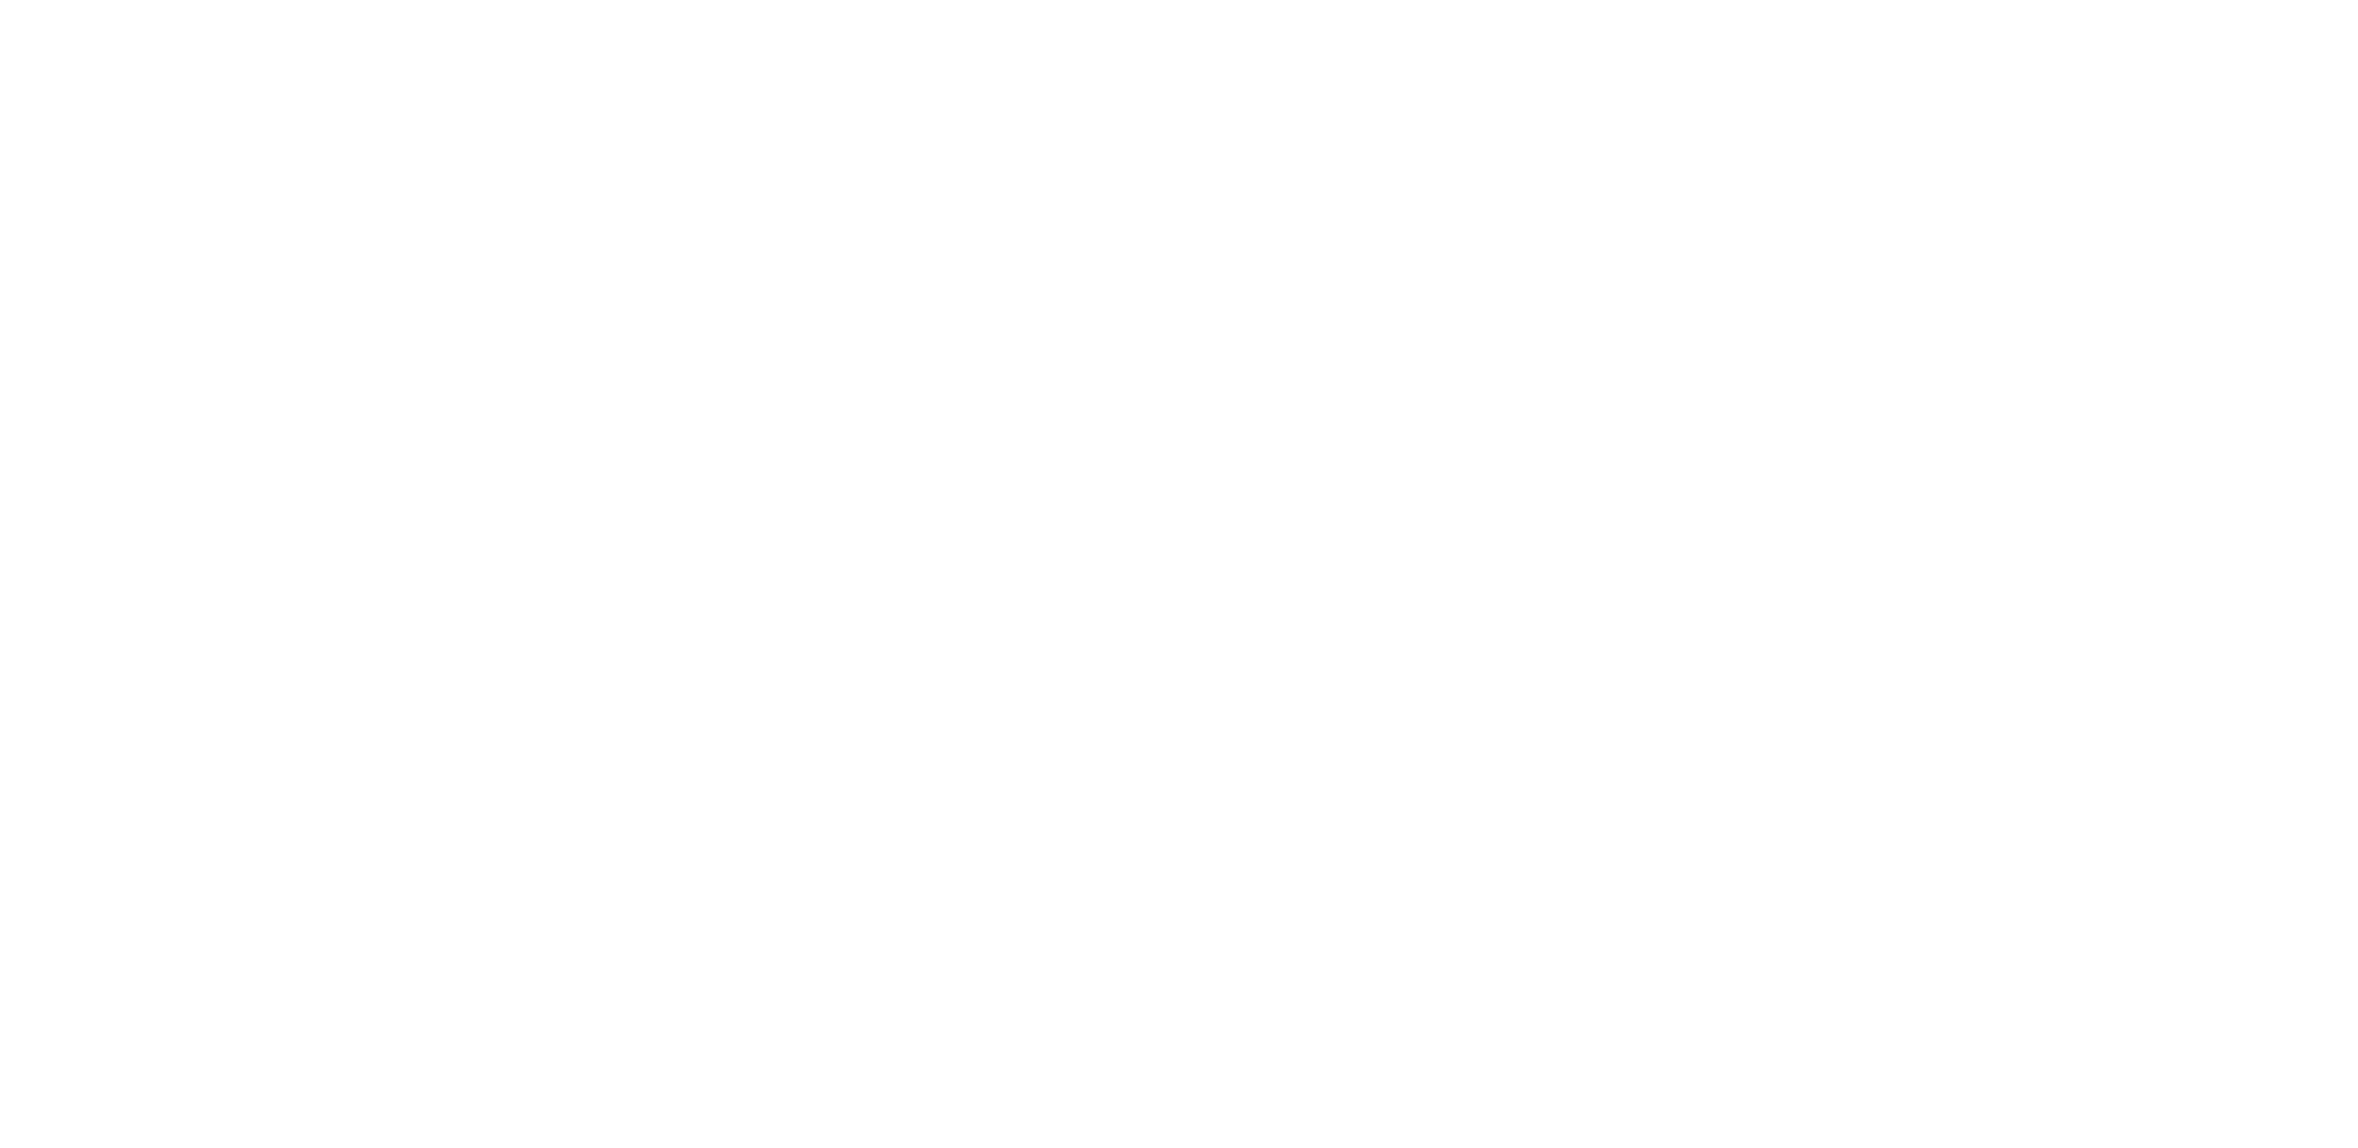 Dark Erotic Books (The Dark Newsletter)